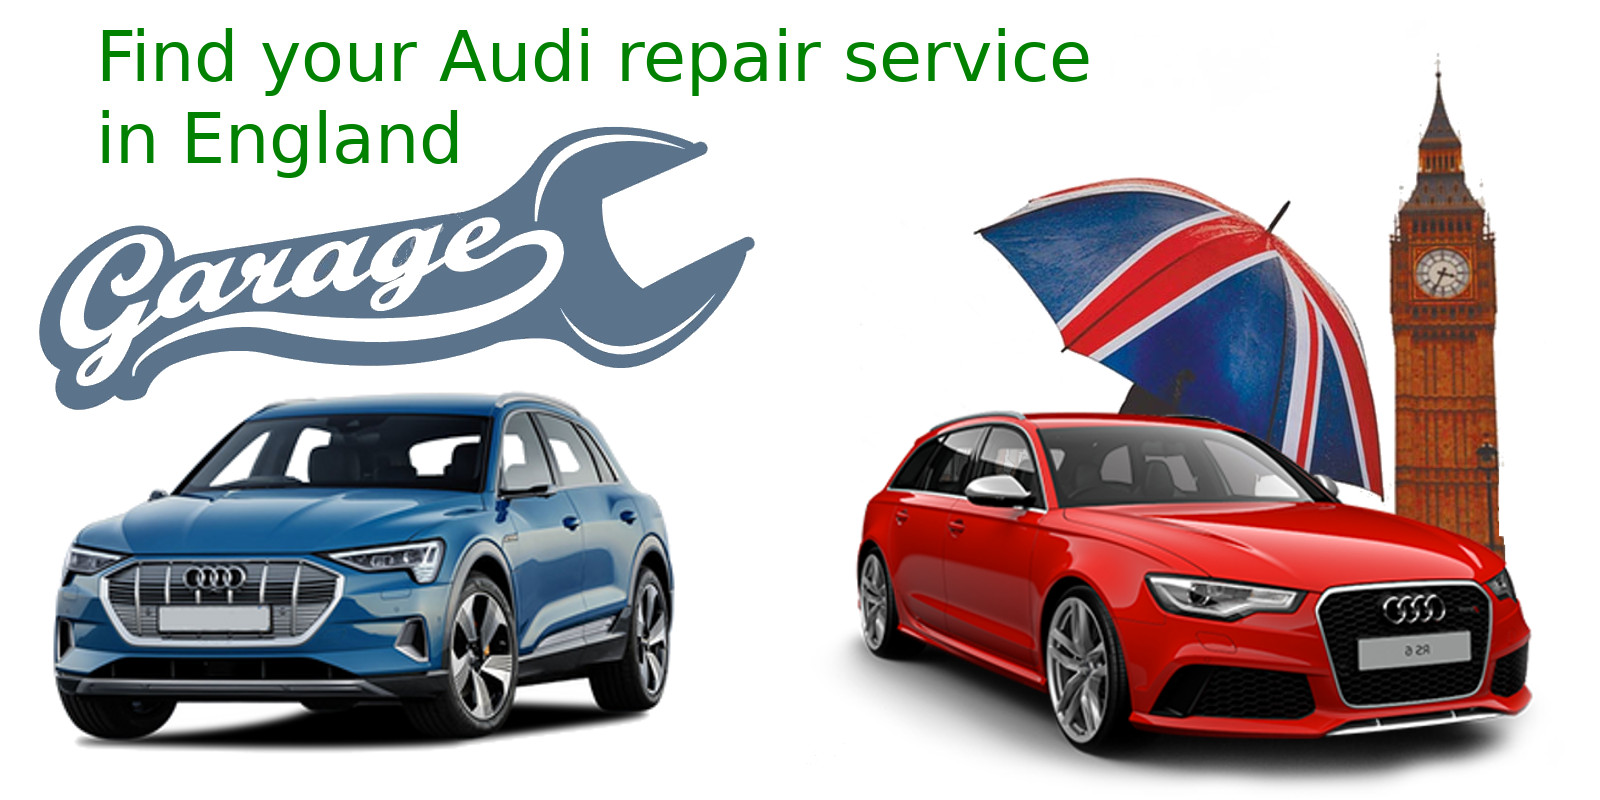 Audi car service in UK